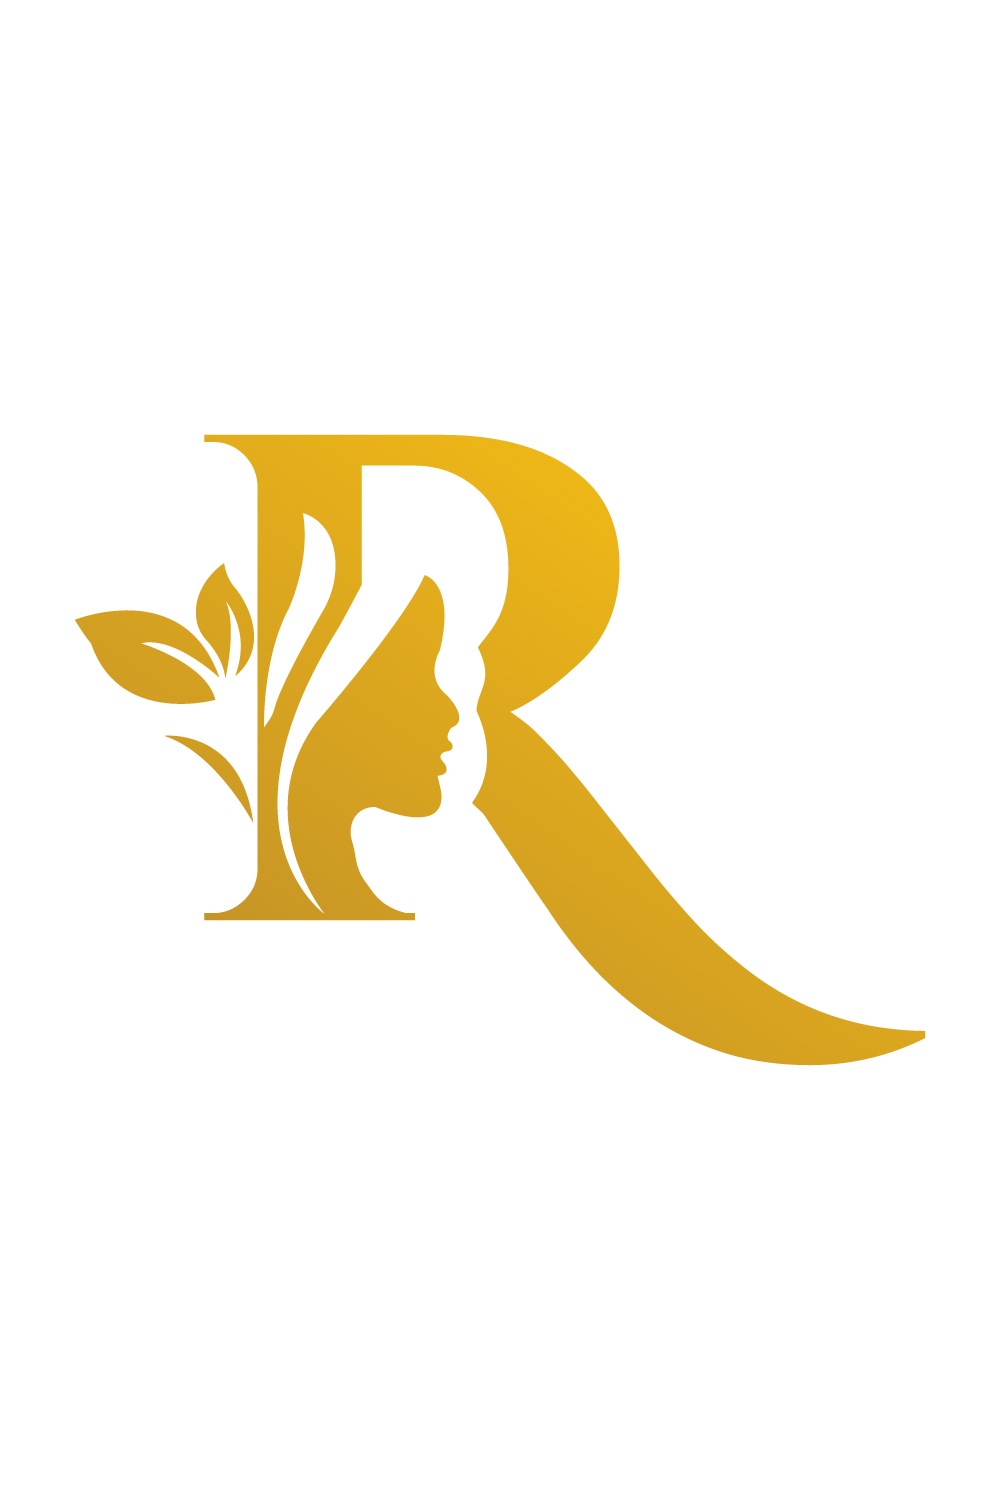 Luxury Fashion R logo design Luxury R letter logo template icon design R Women fashion logo design golden color pinterest preview image.